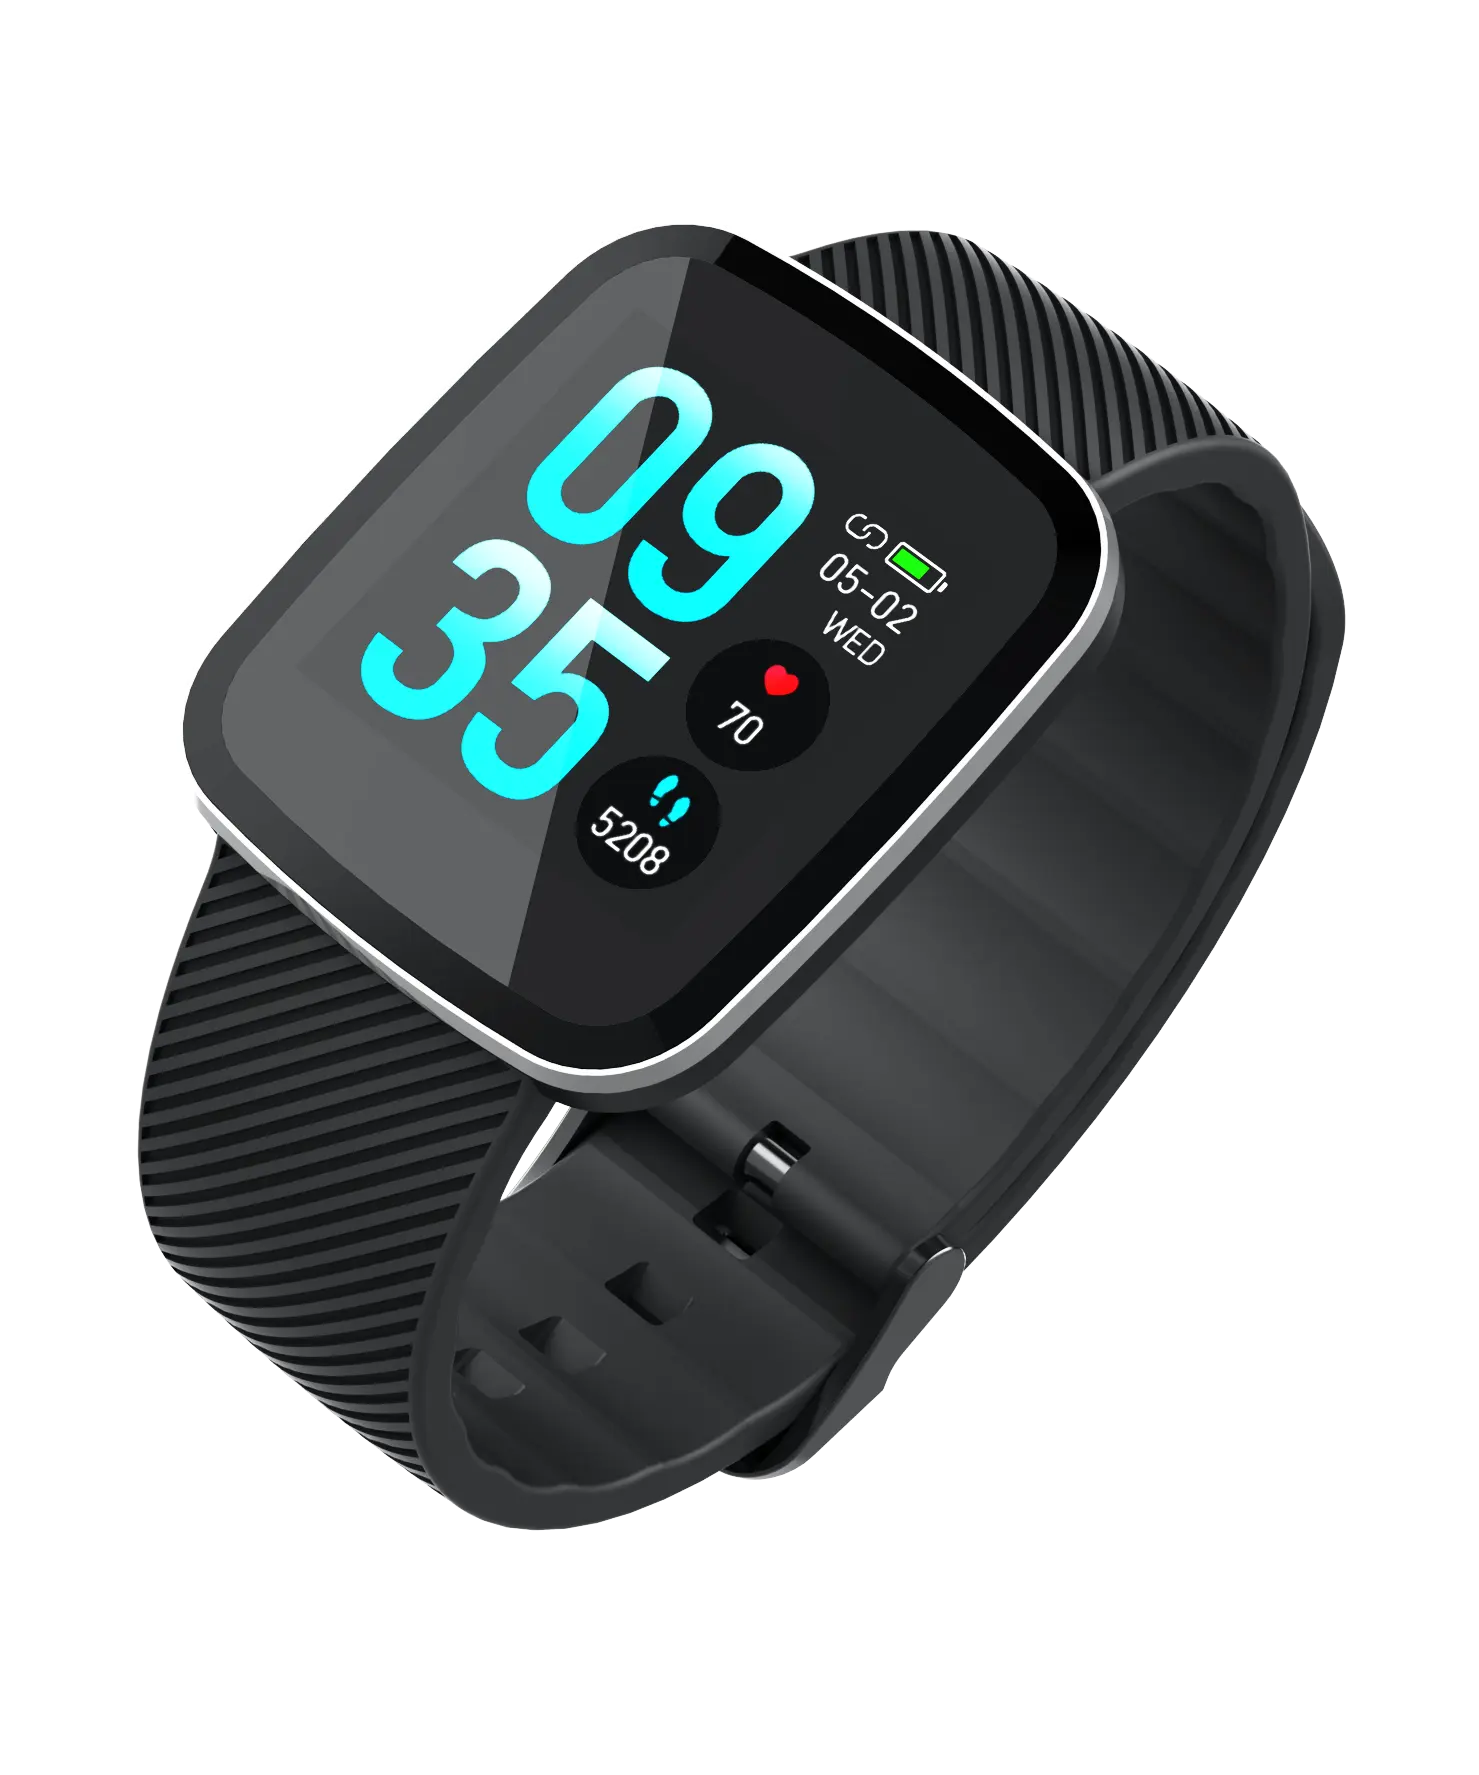 Z30สมาร์ทวอทช์ผู้ชายติดตามการออกกำลังกาย Pedometer นาฬิกาอัตราการเต้นหัวใจนาฬิกาข้อมือสร้อยข้อมืออัจฉริยะนาฬิกาสำหรับ IOS Android